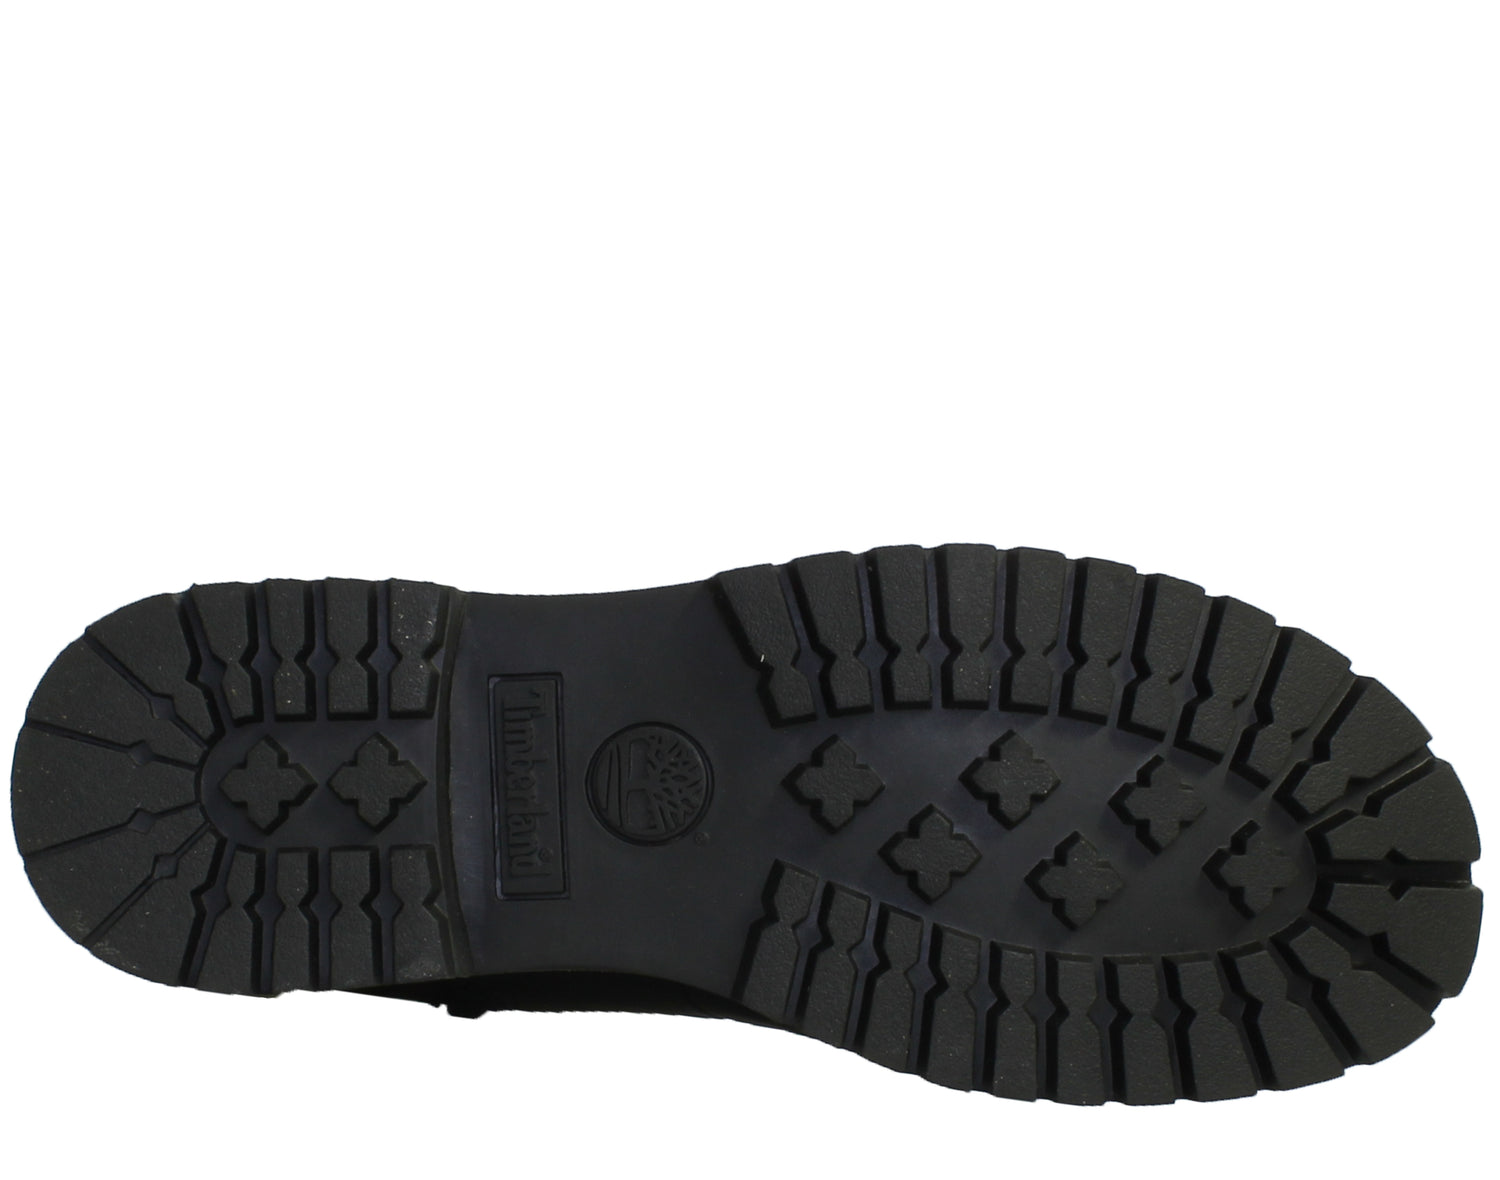 Timberland Premium 14-Inch Waterproof Side-Zip Lace-Up Women's Boots